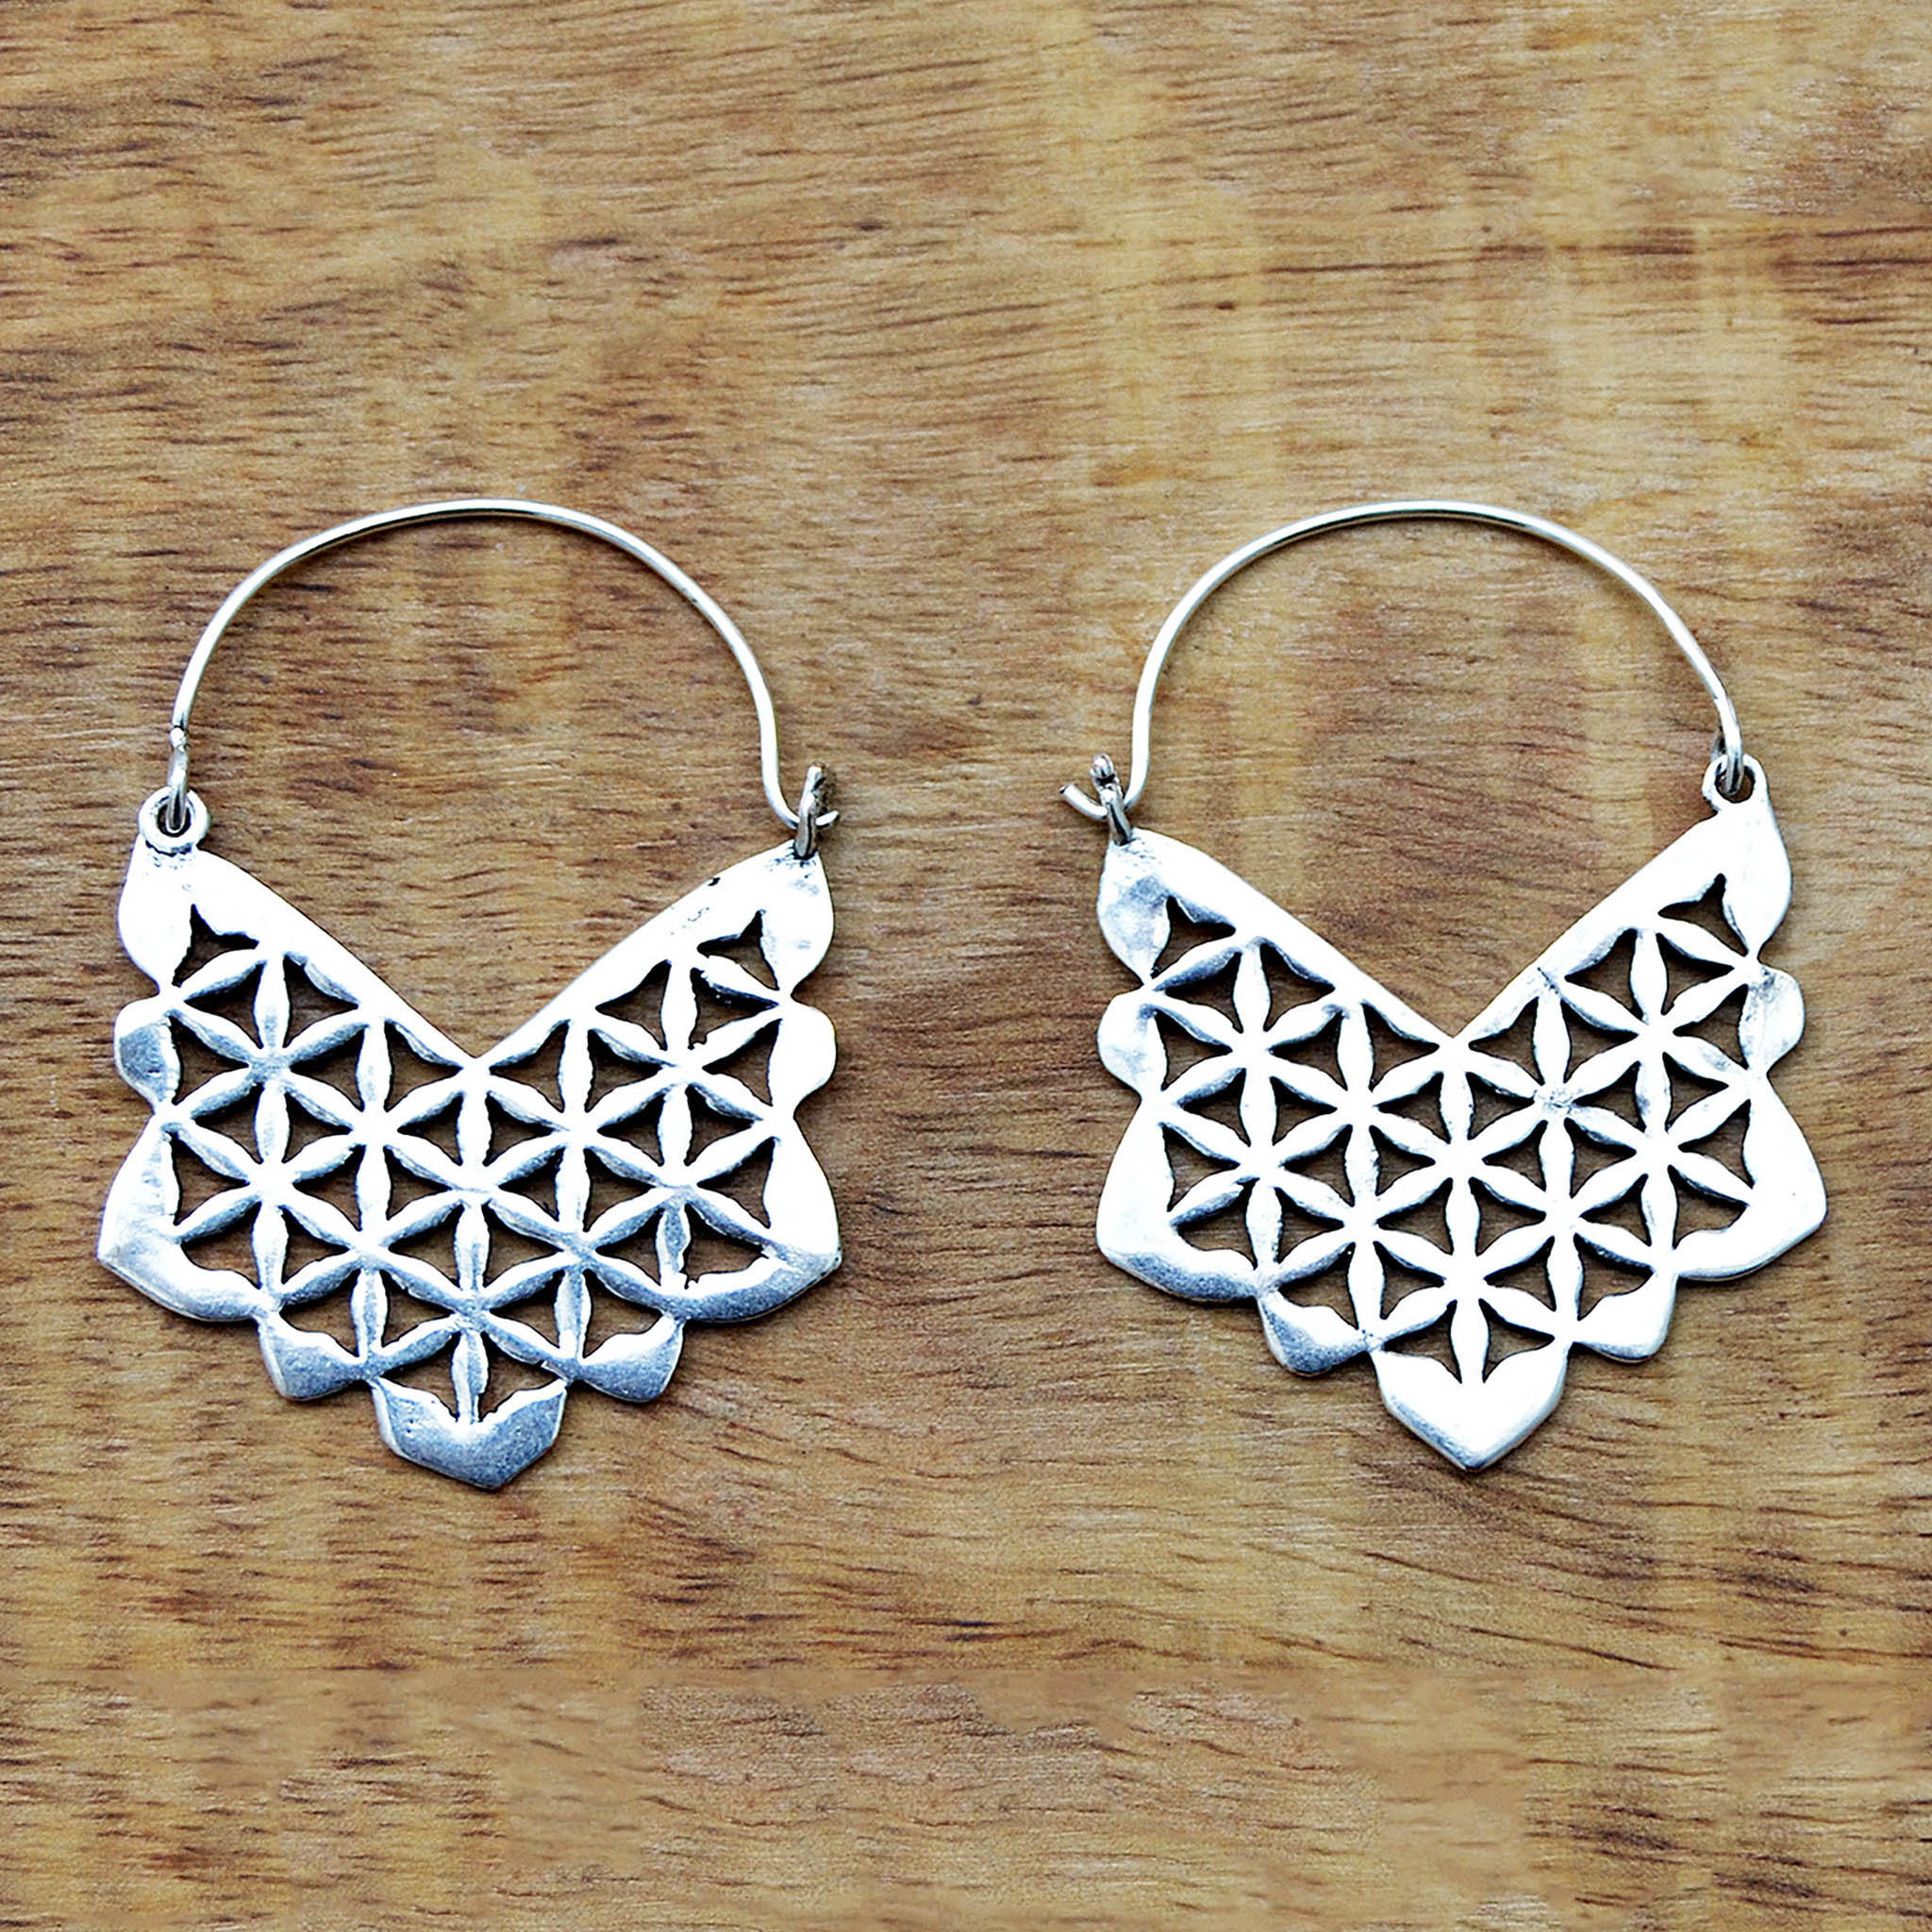 Geometric tribal earrings